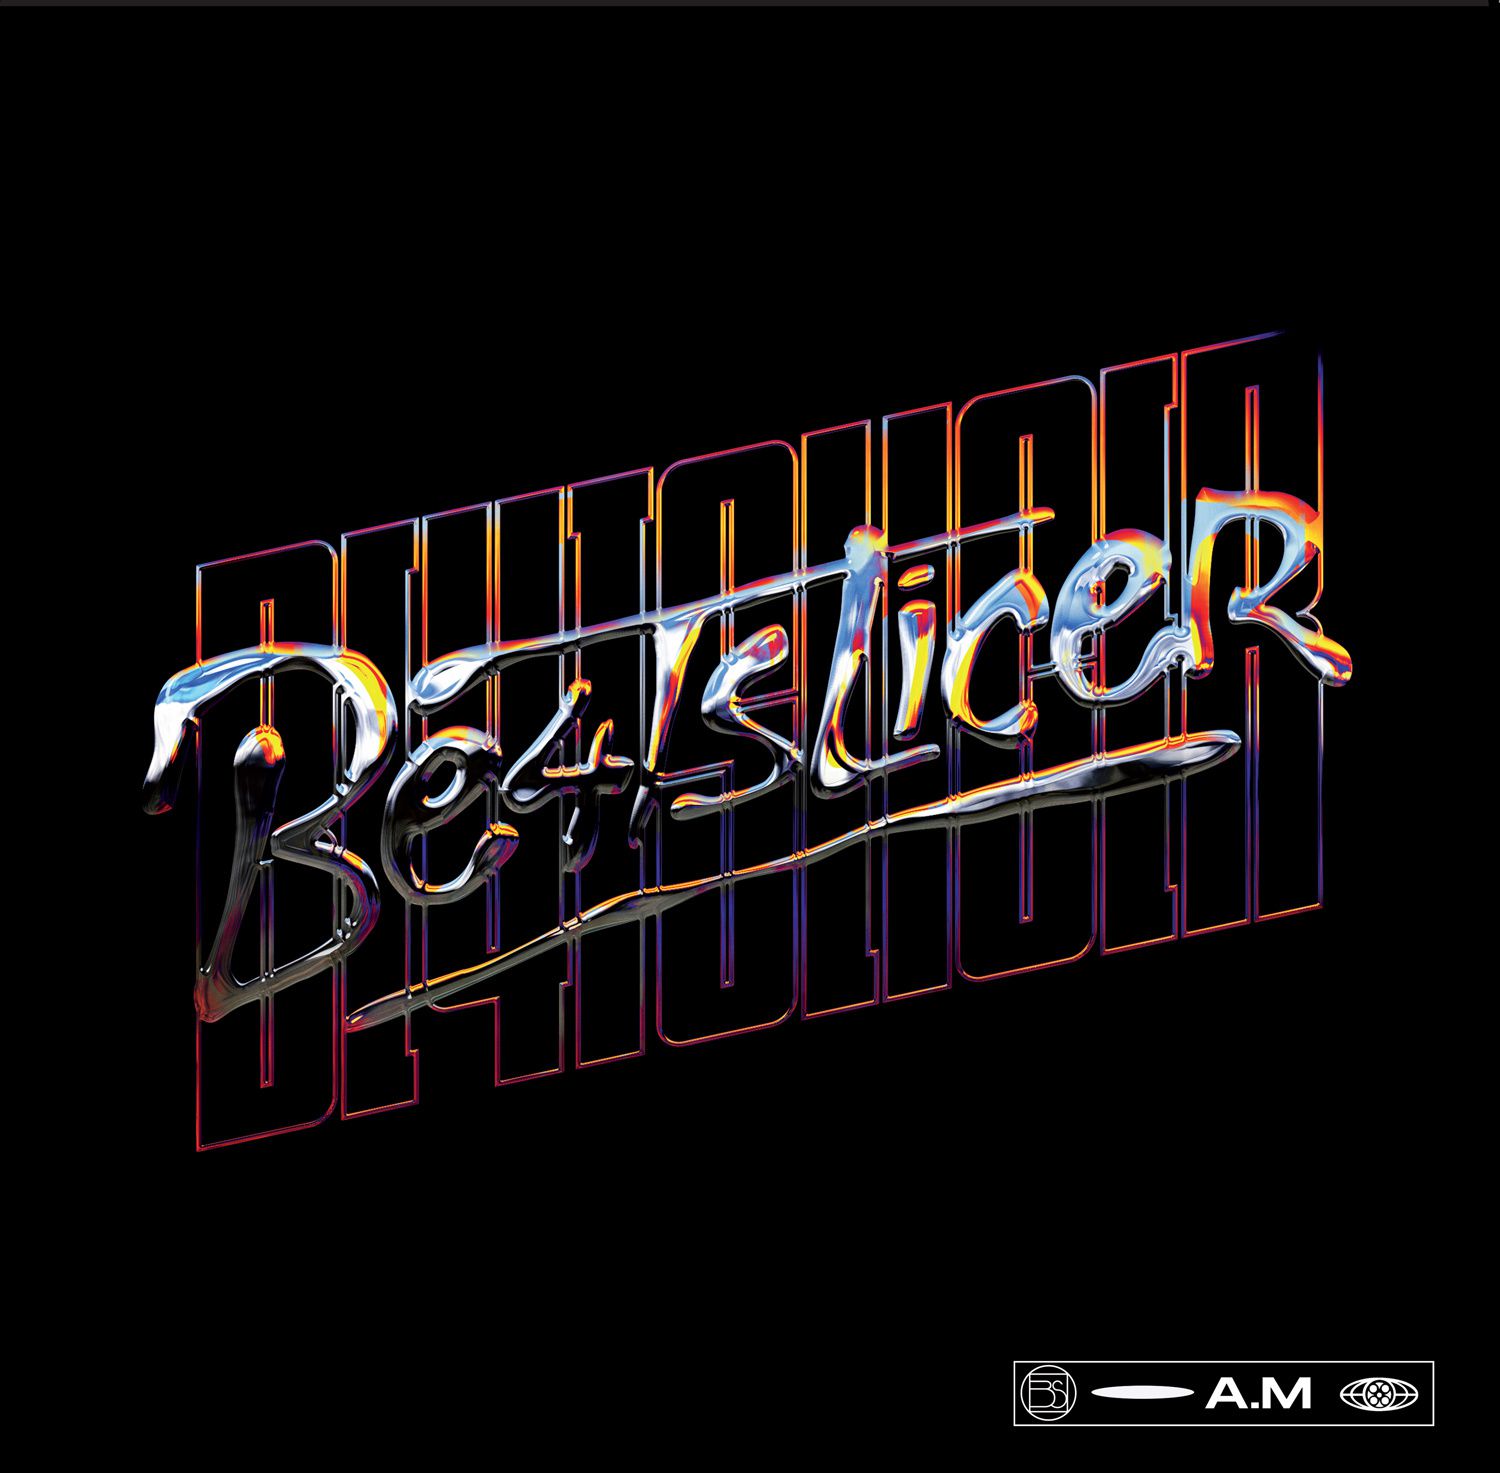 BE4T SLICER, nouvel album A.M.